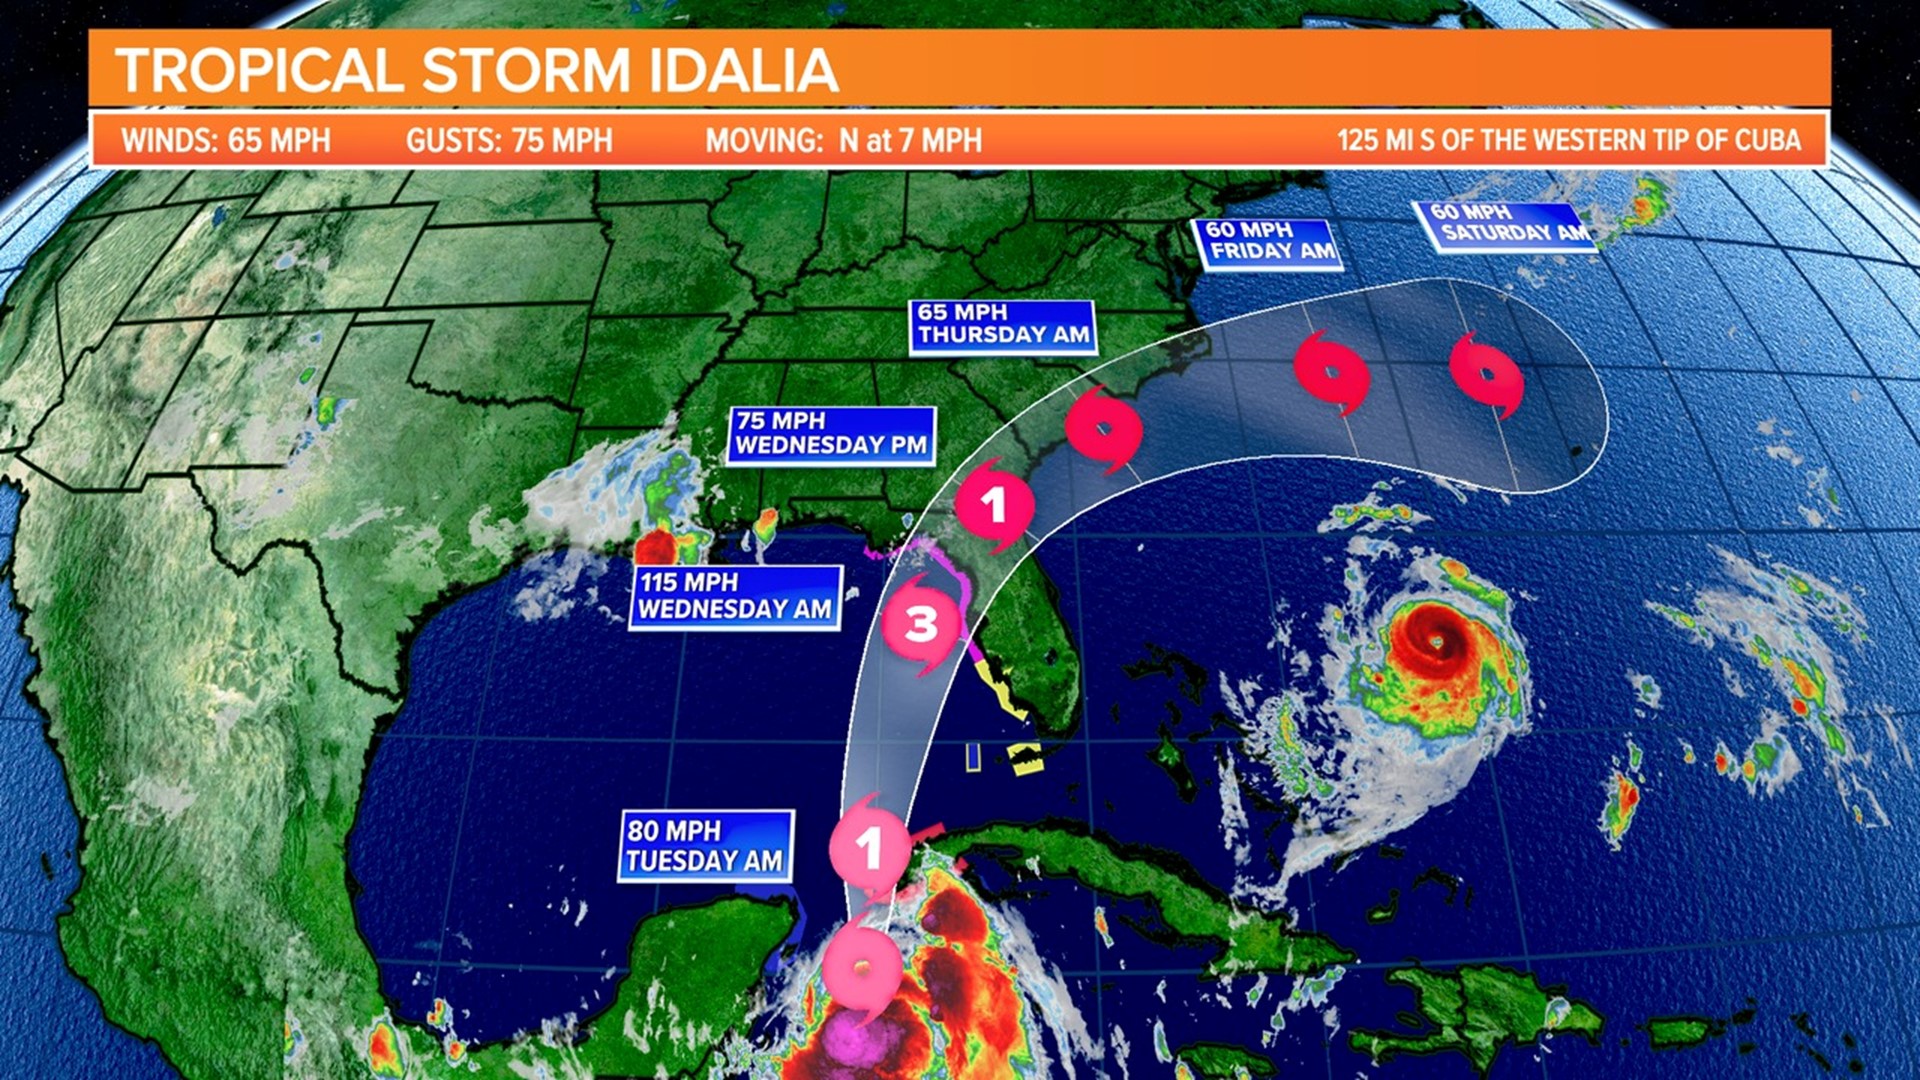 Idalia is forecast to become a major hurricane before making landfall Wednesday along the western coast of Florida.